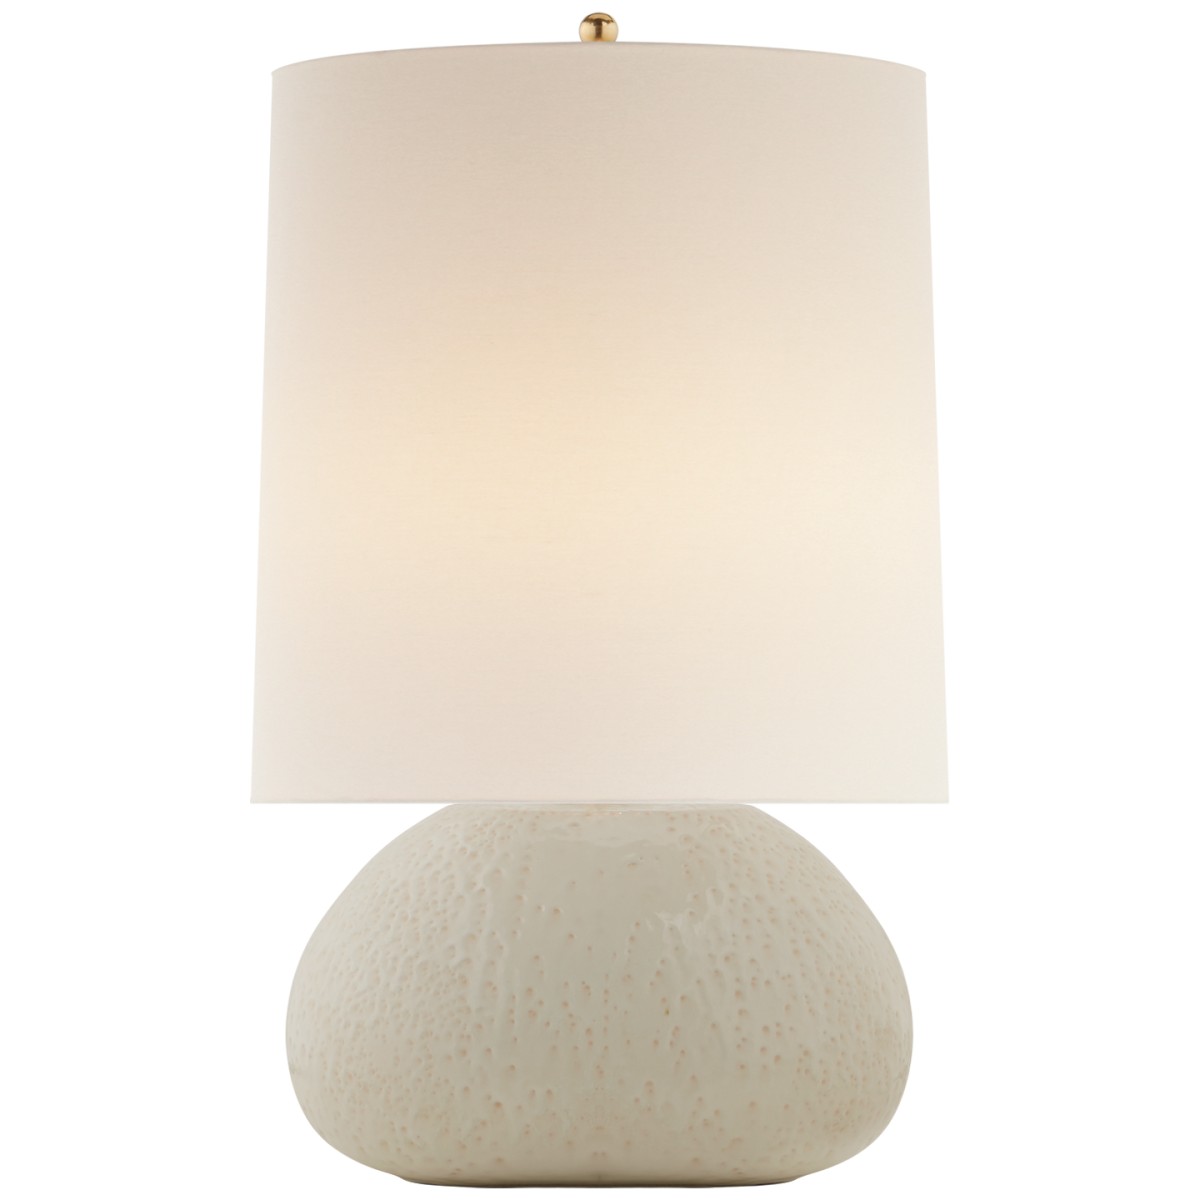 Sumava Medium Table Lamp with Linen Shade | Highlight image